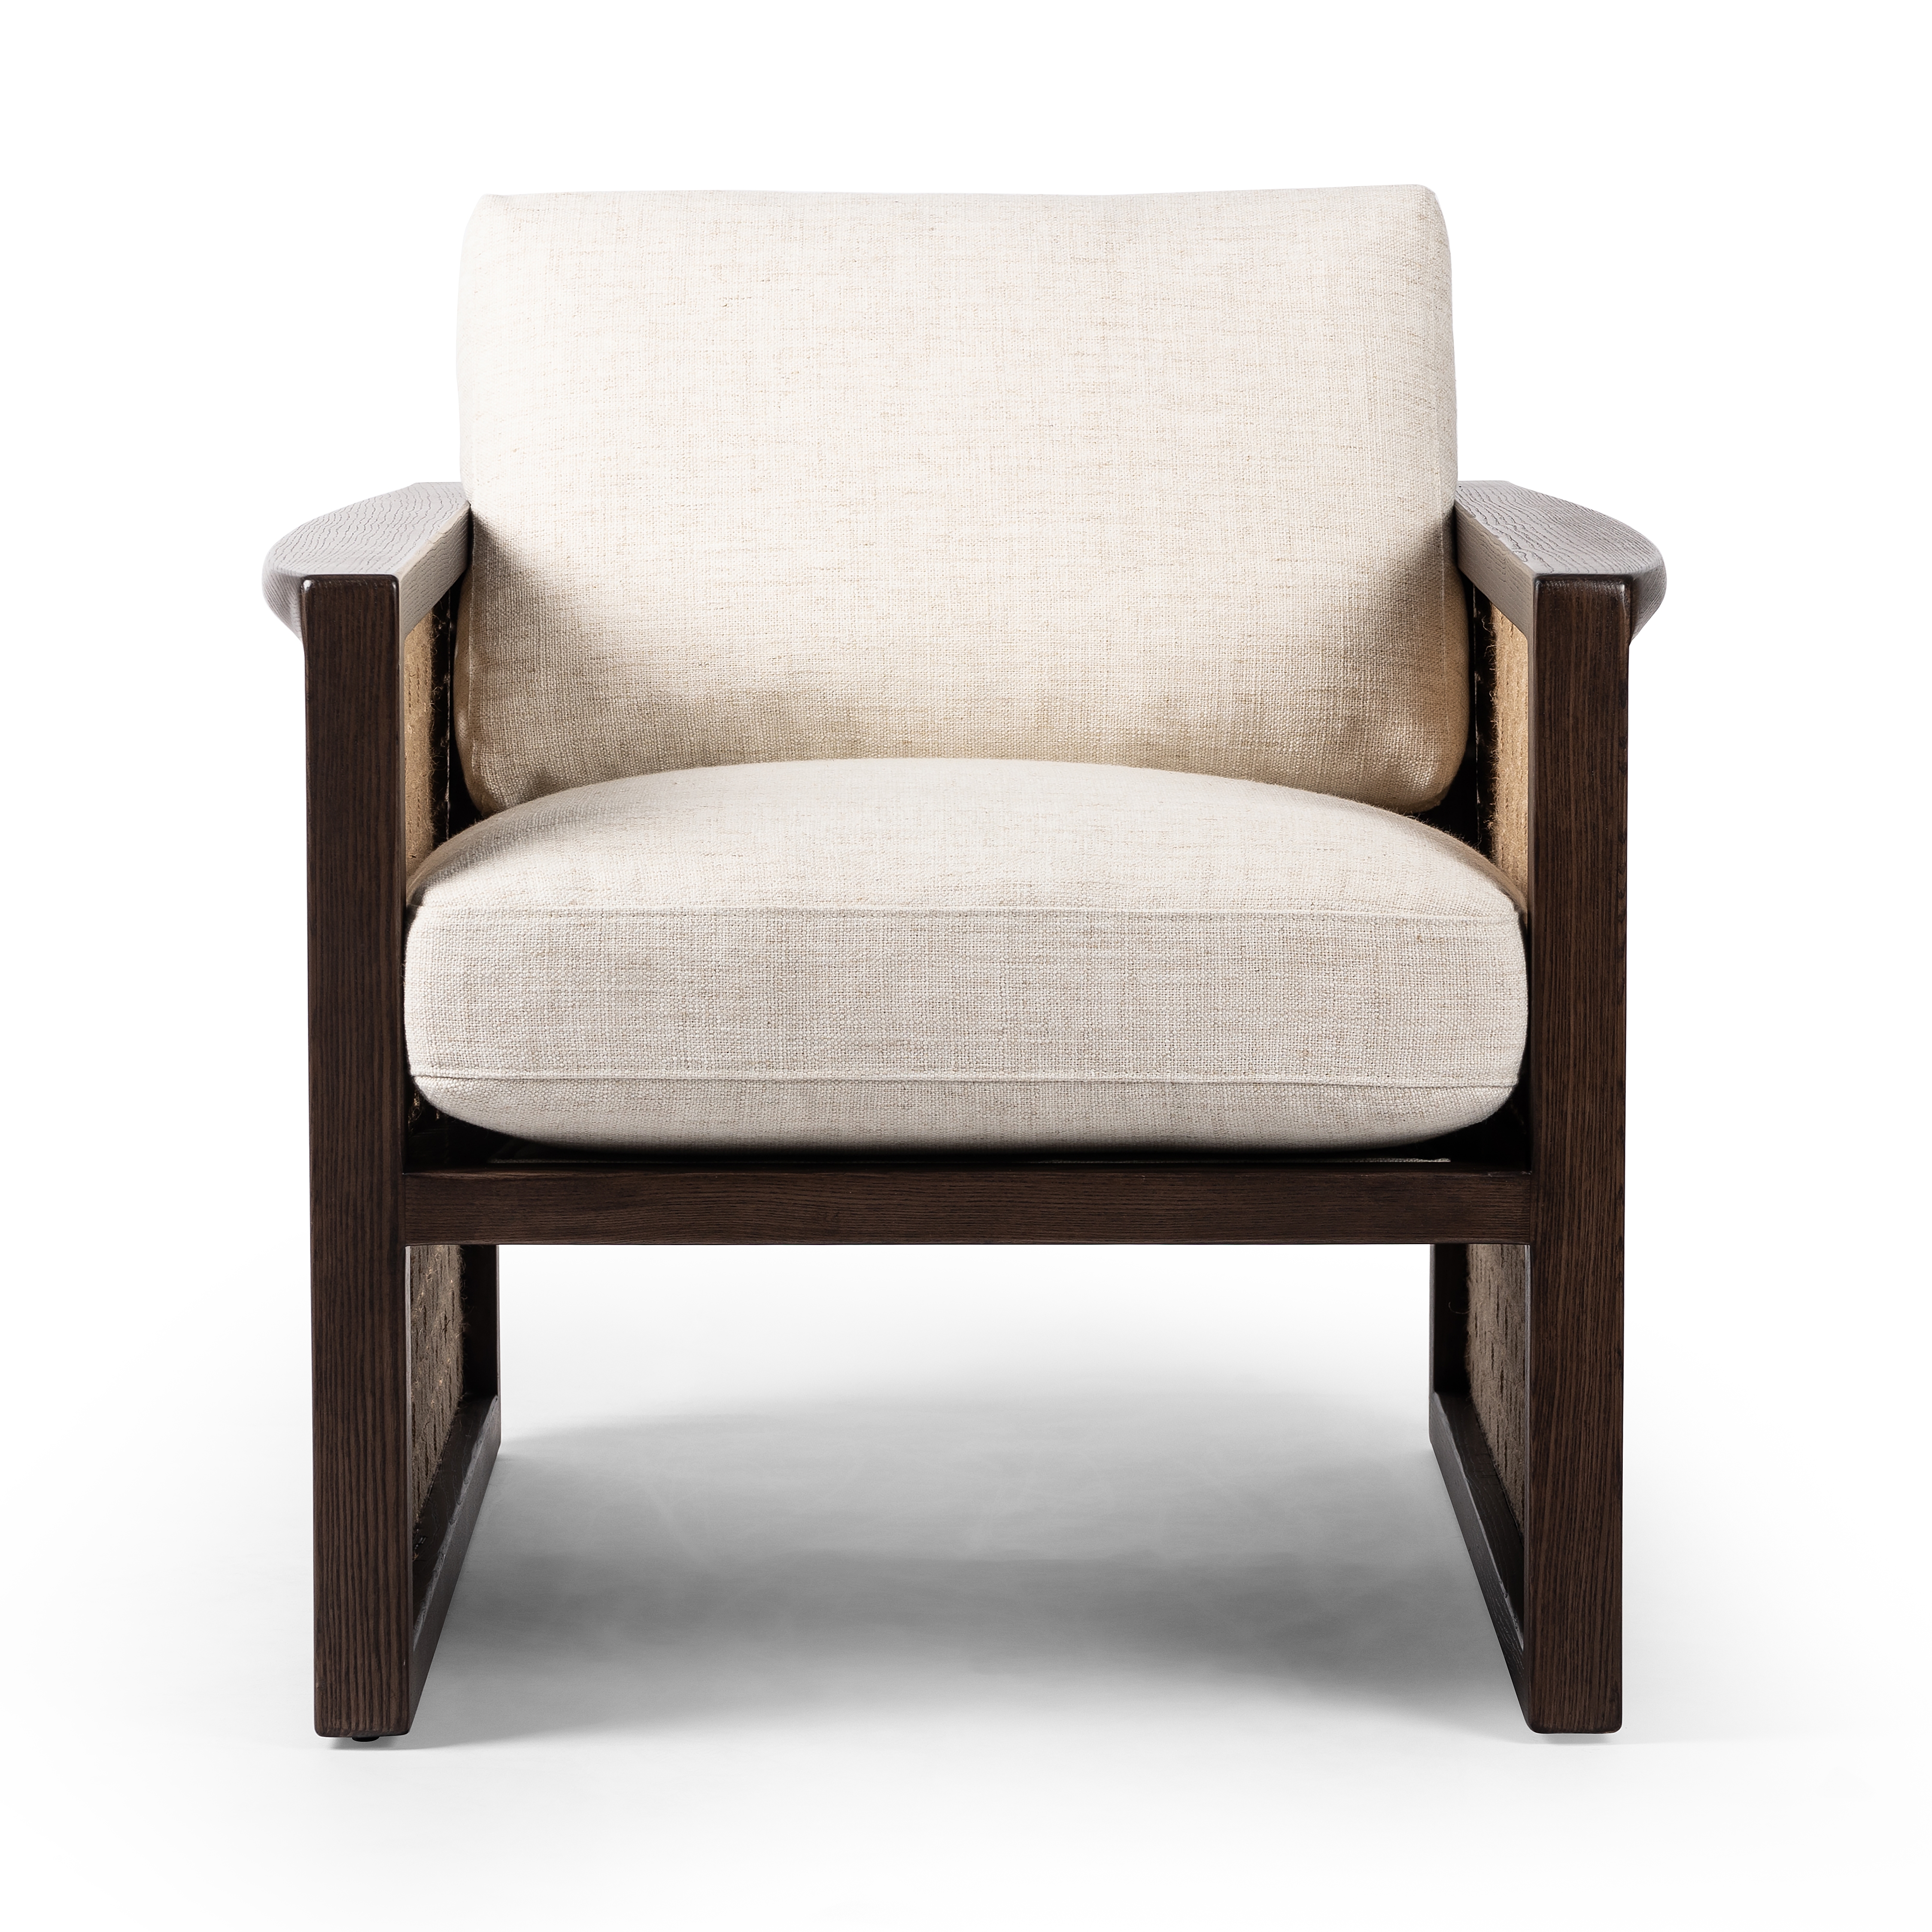 Moana Chair-Alcala Cream - Image 3